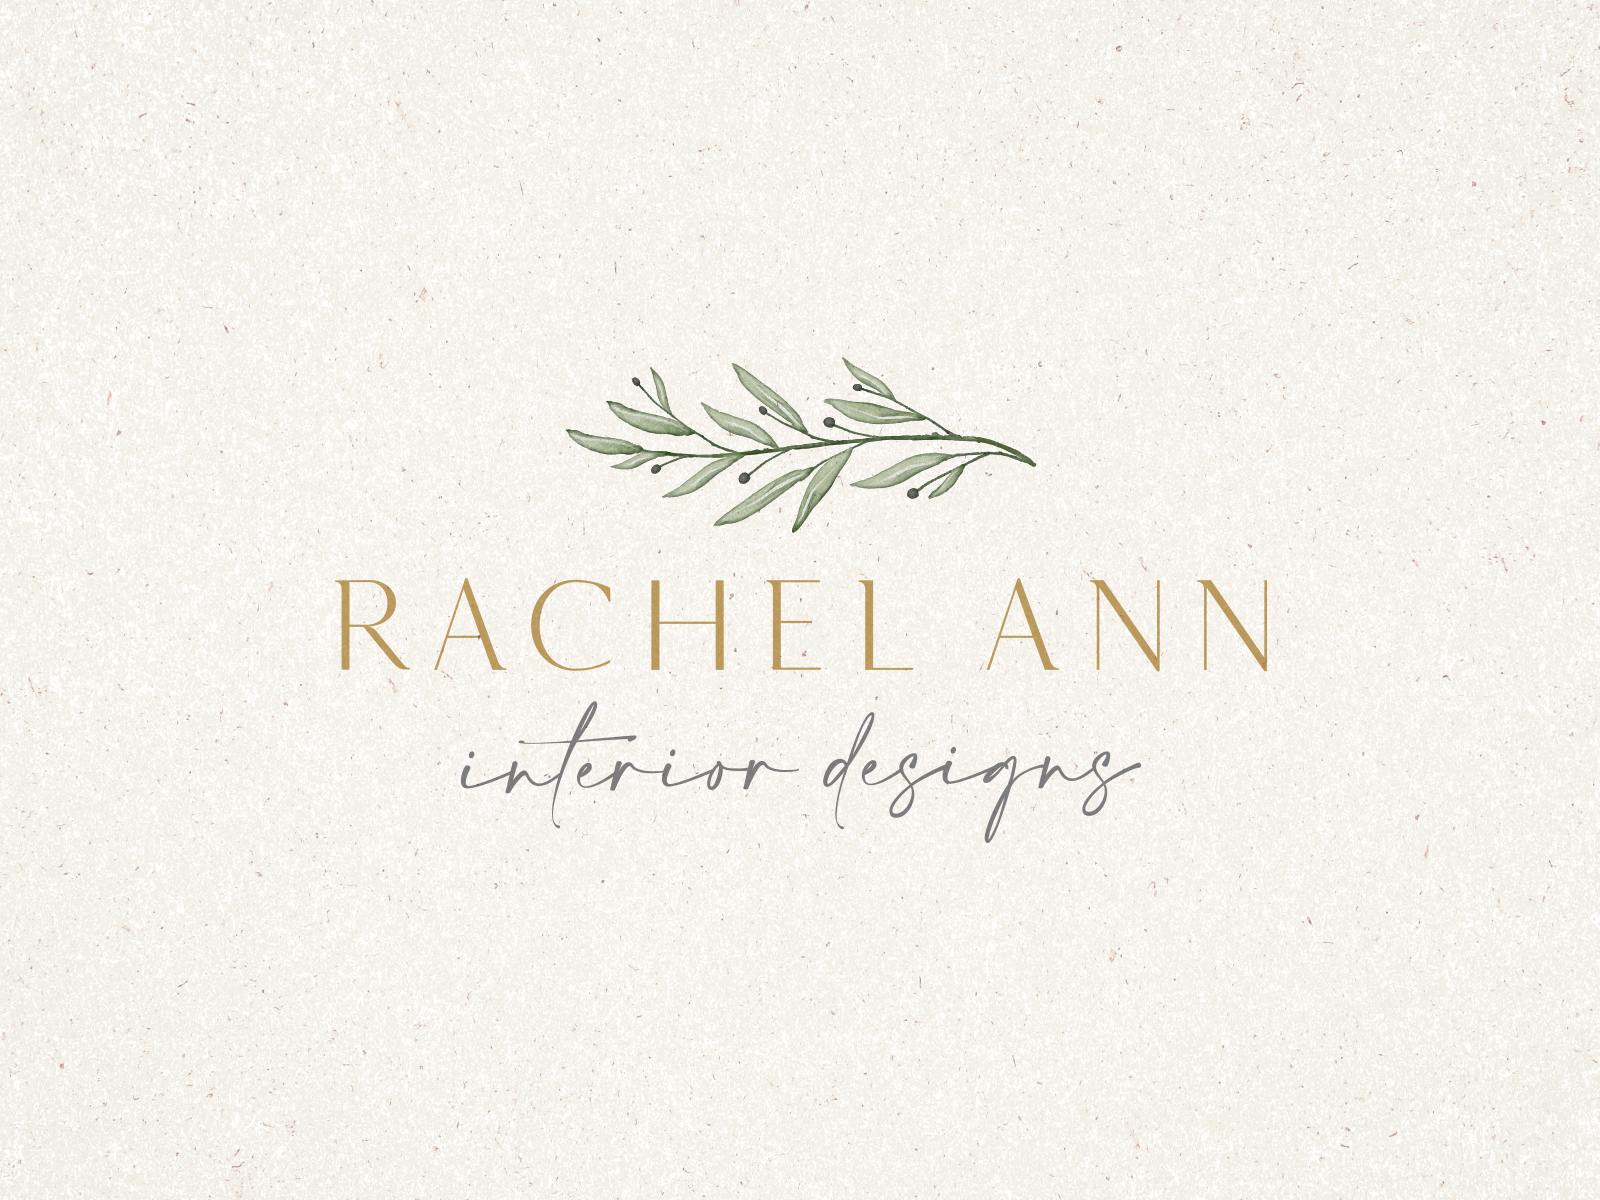 Rachel Ann Interior Designs by Lauren Summers on Dribbble